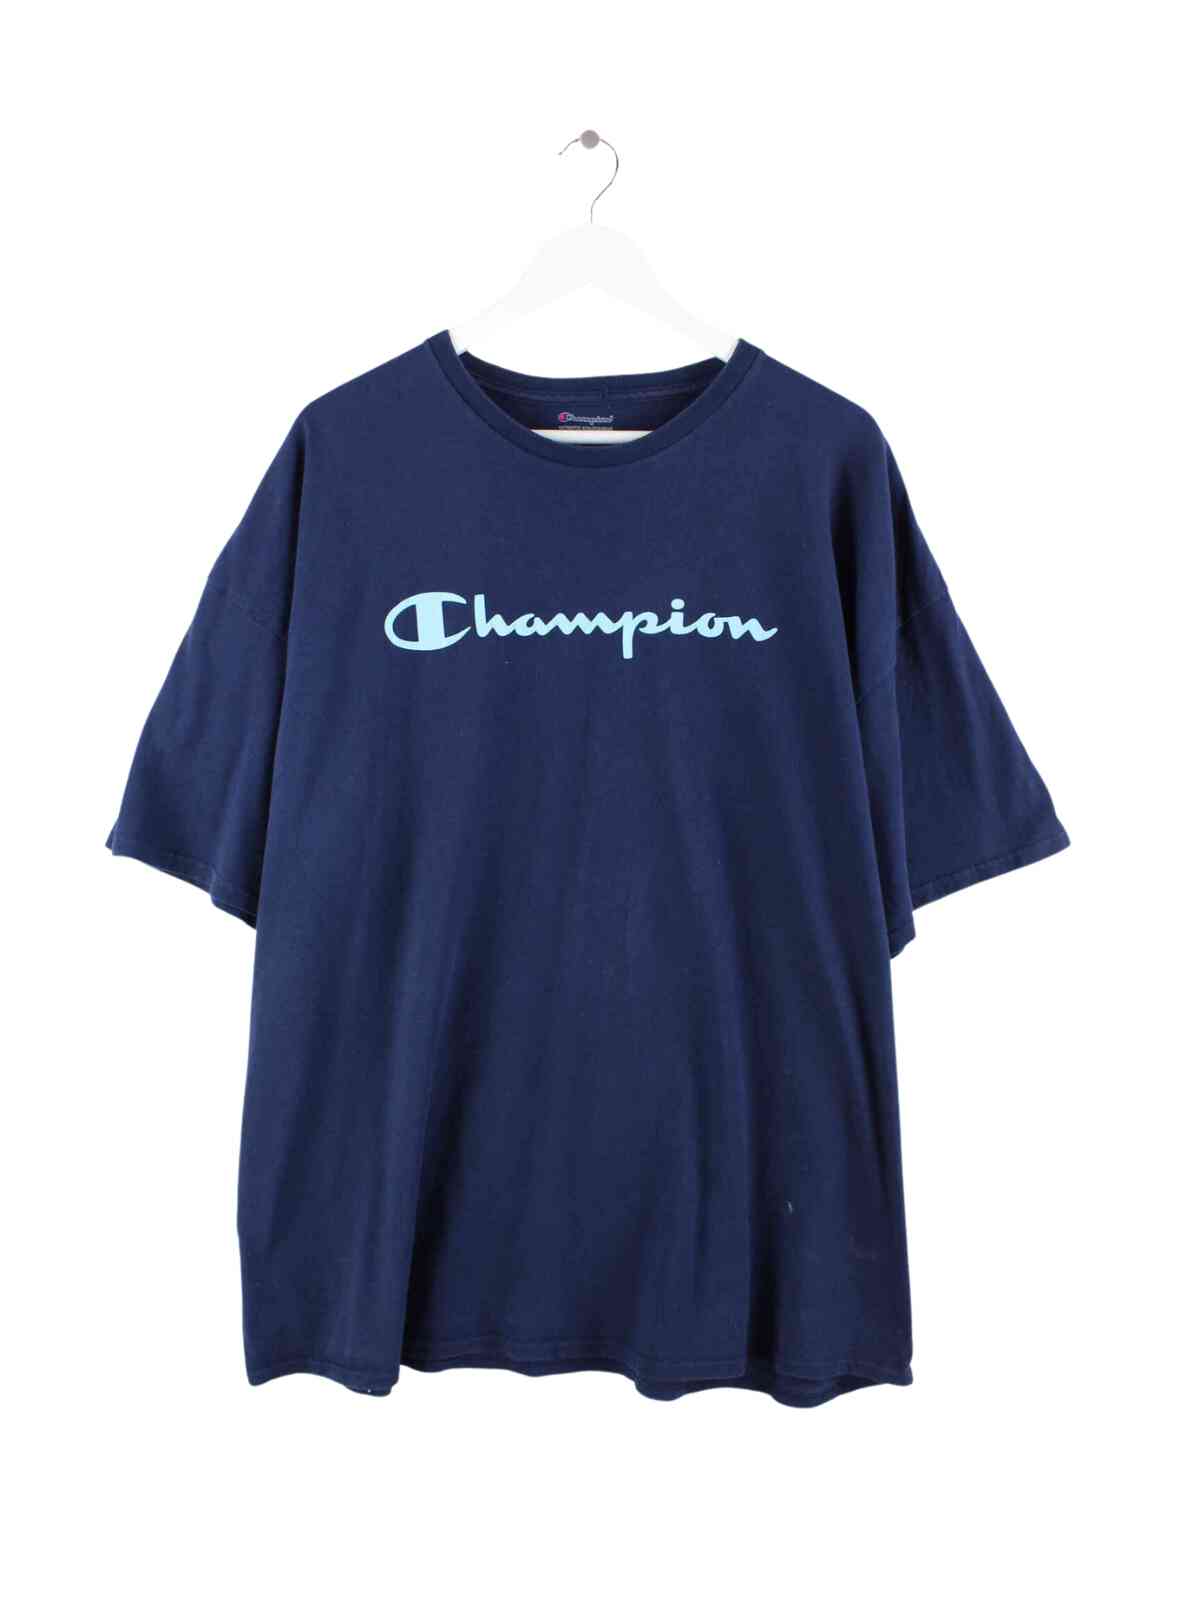 – Peeces Blau 3XL T-Shirt Champion Print